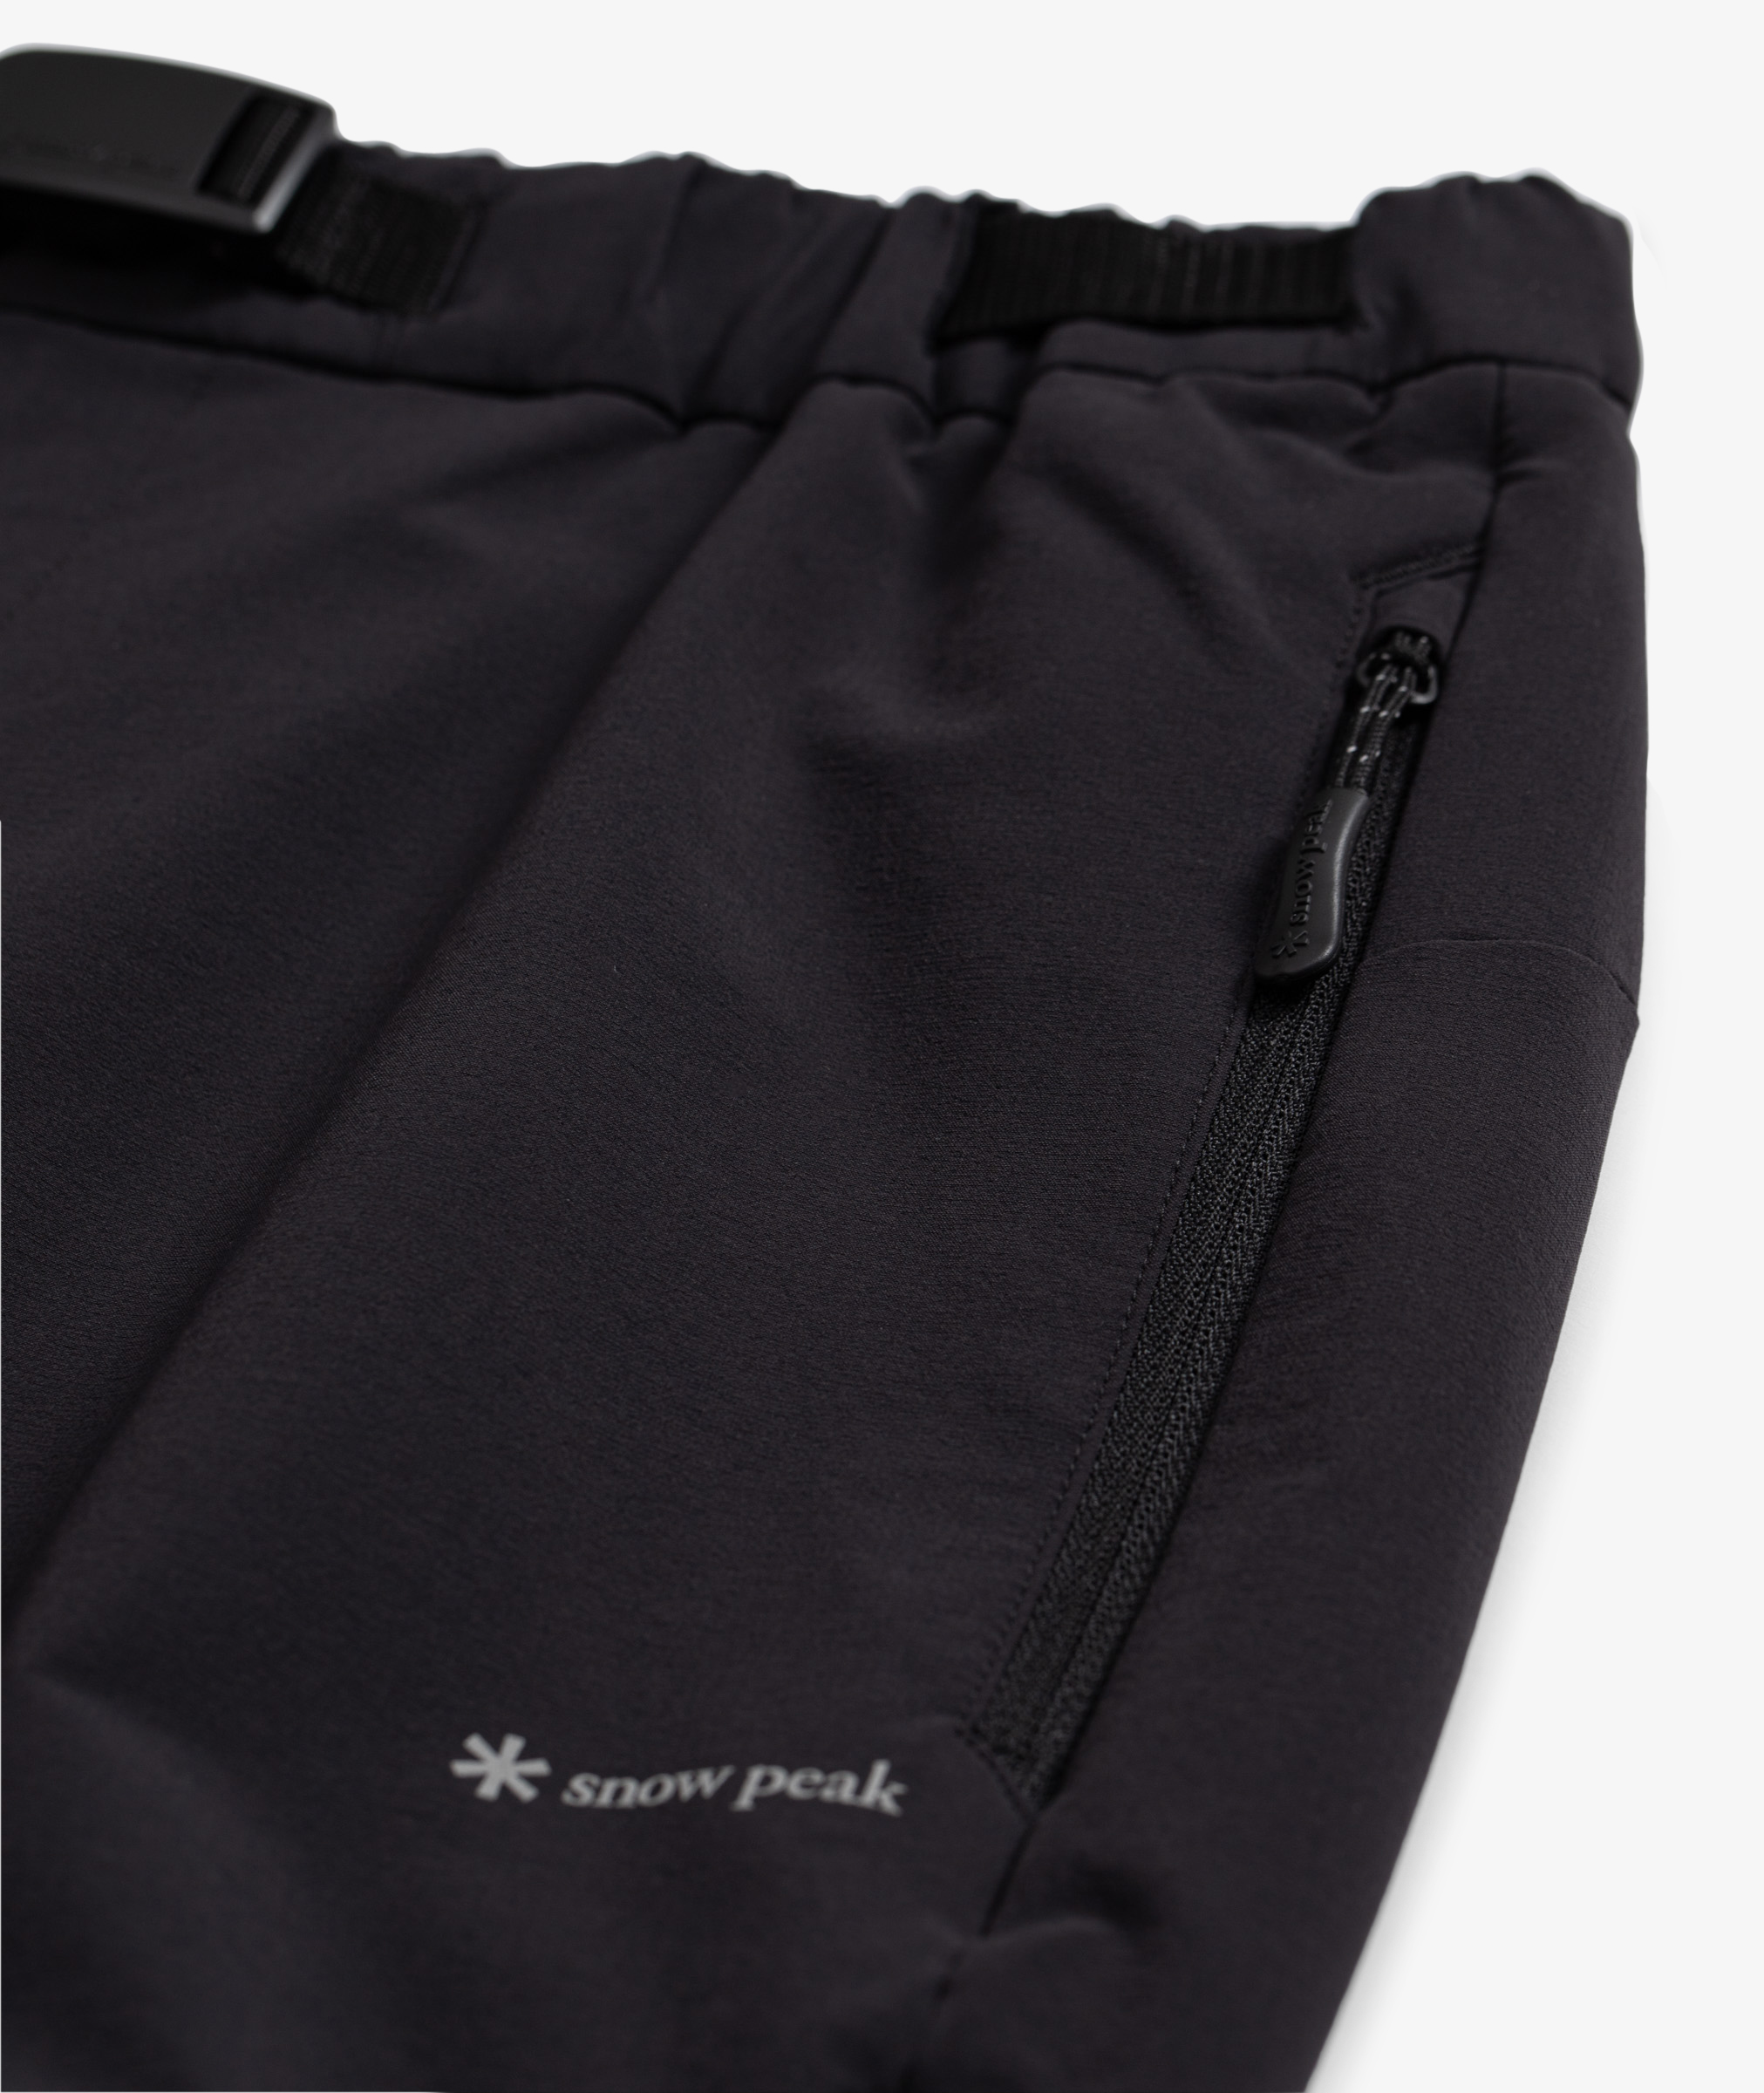 Norse Store | Shipping Worldwide - Snow Peak DWR Comfort Pants - Black